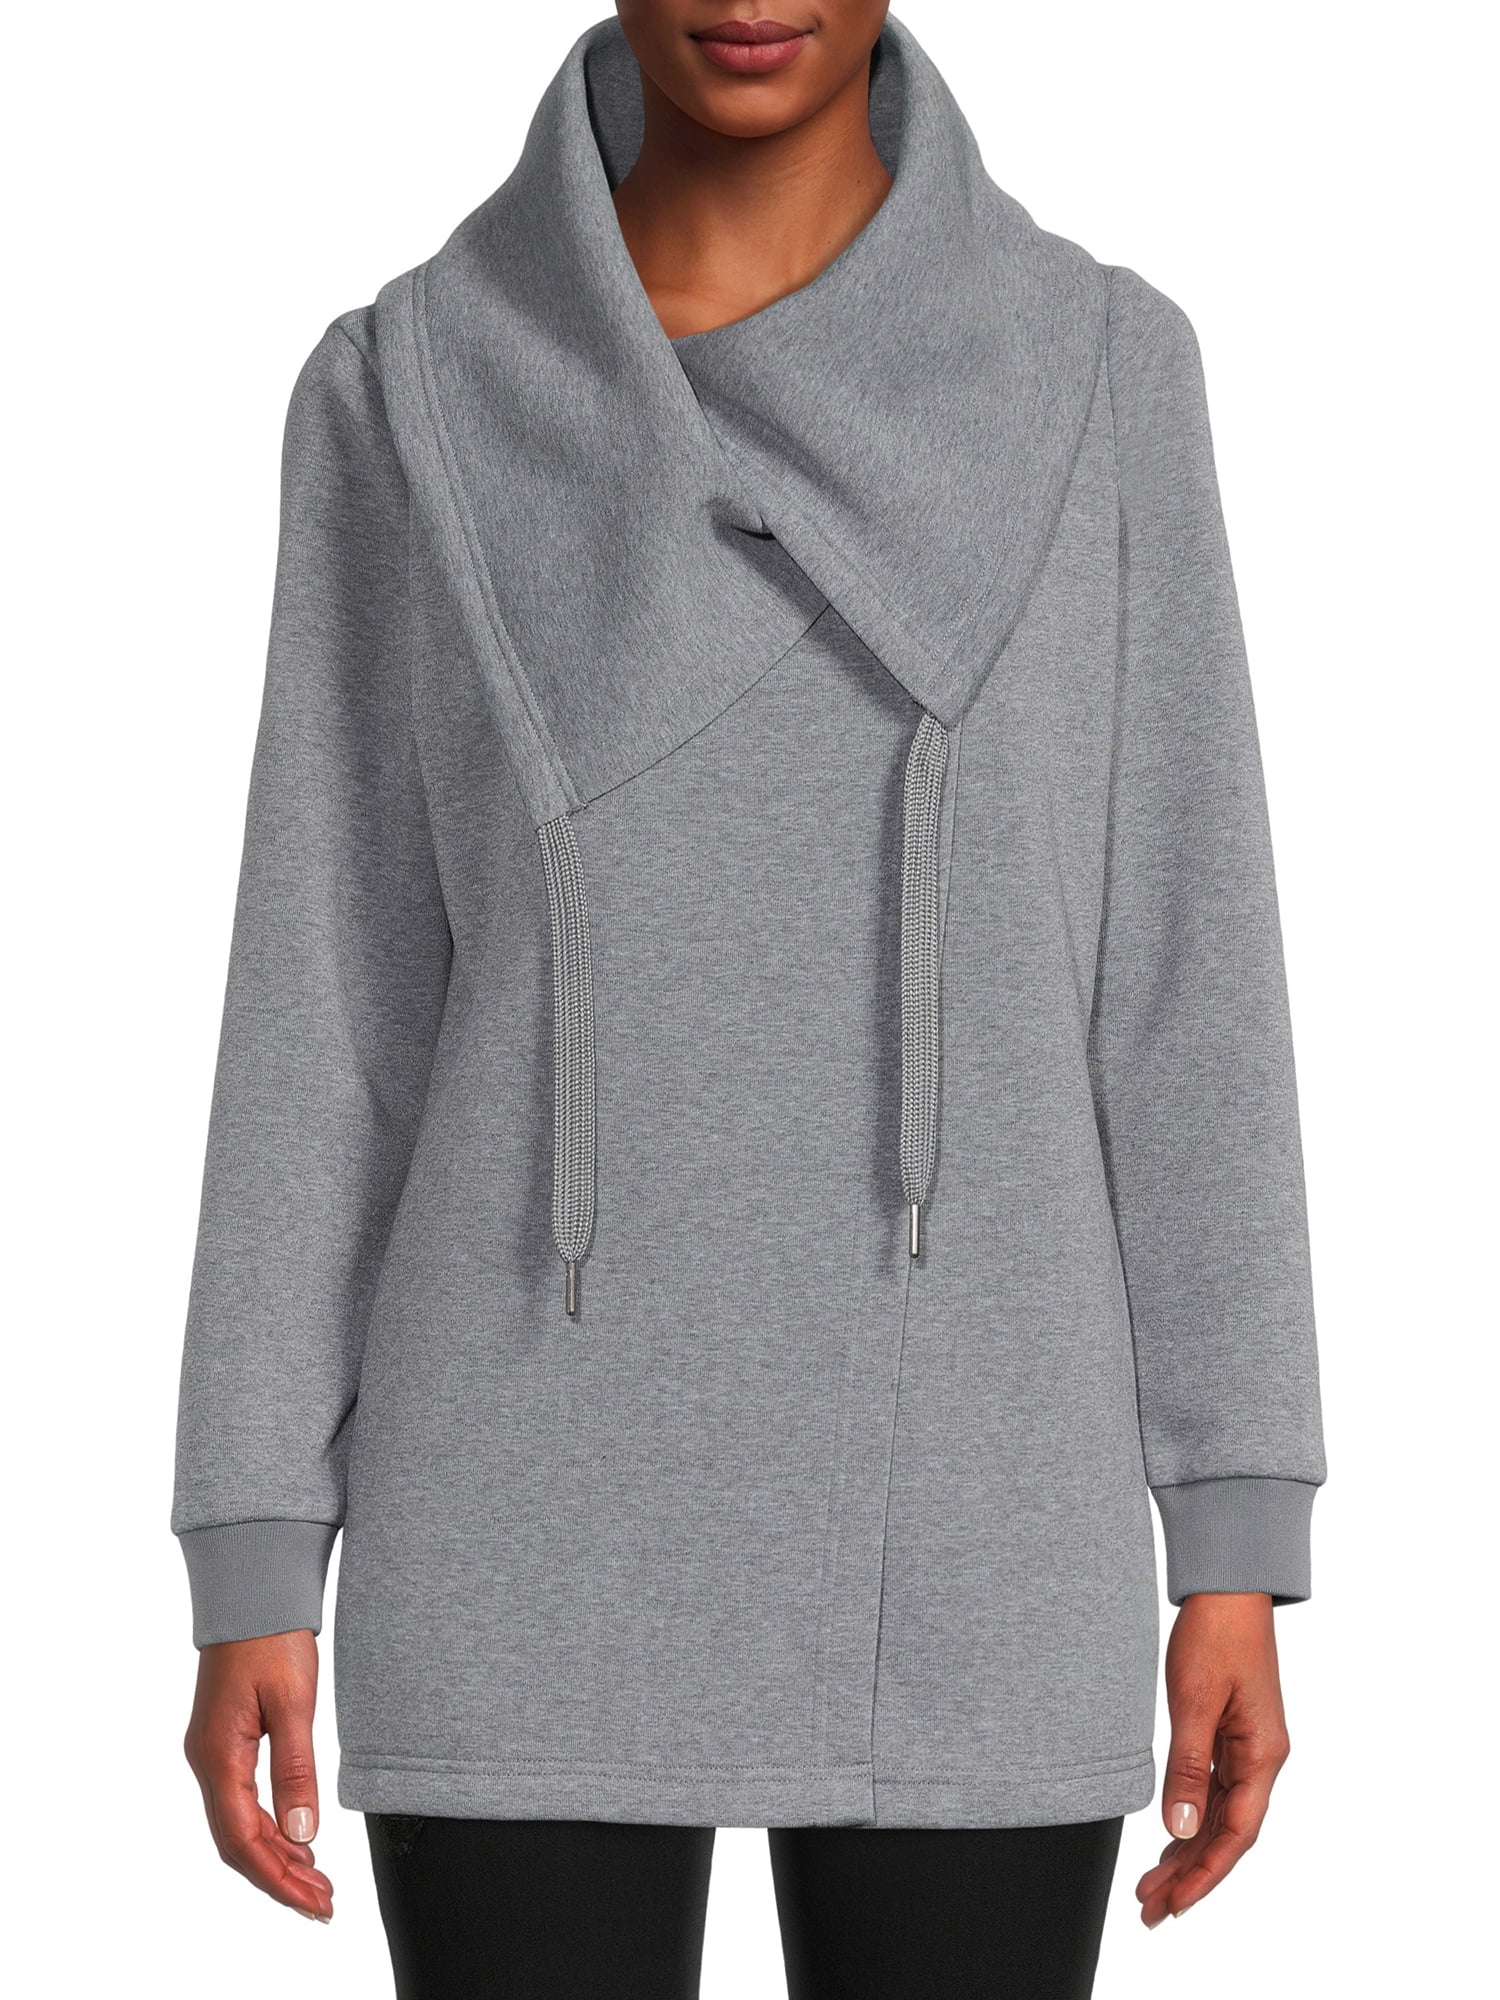 Big Chill Women's Wrap Fleece Jacket - Walmart.com